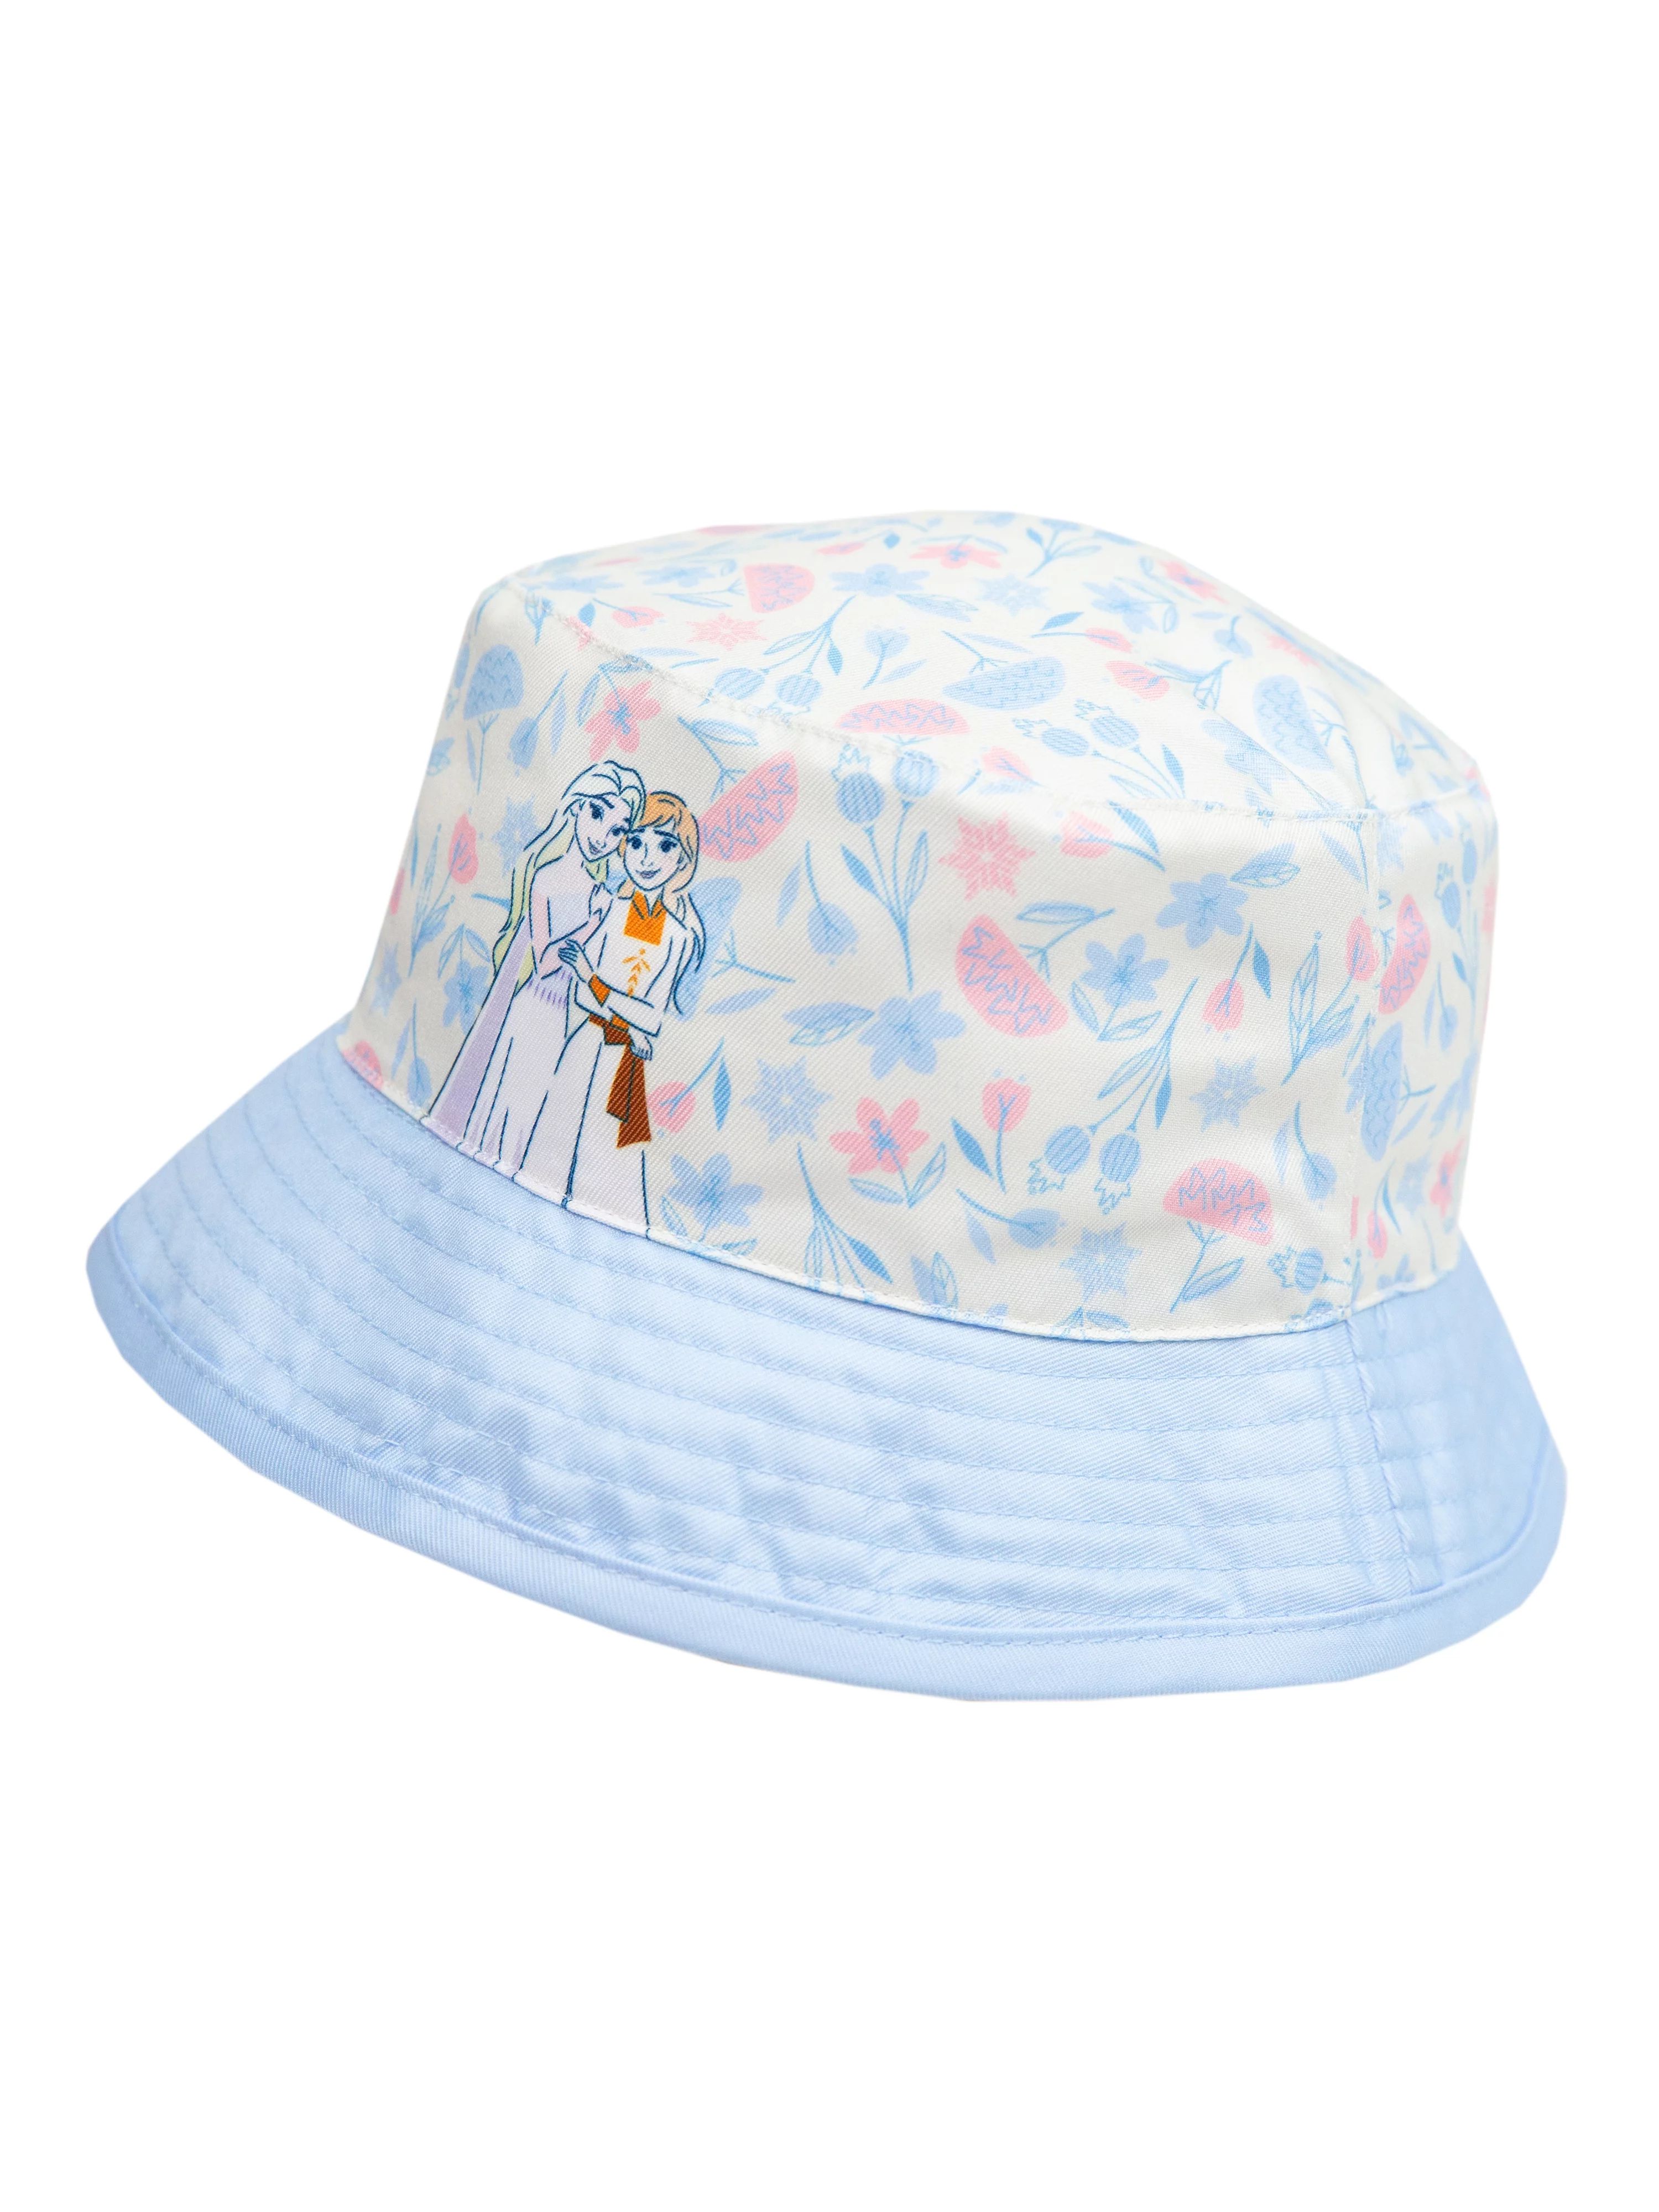 Disney Frozen Toddler Girls Blue Reversible Bucket Style Swim Hat | Walmart (US)